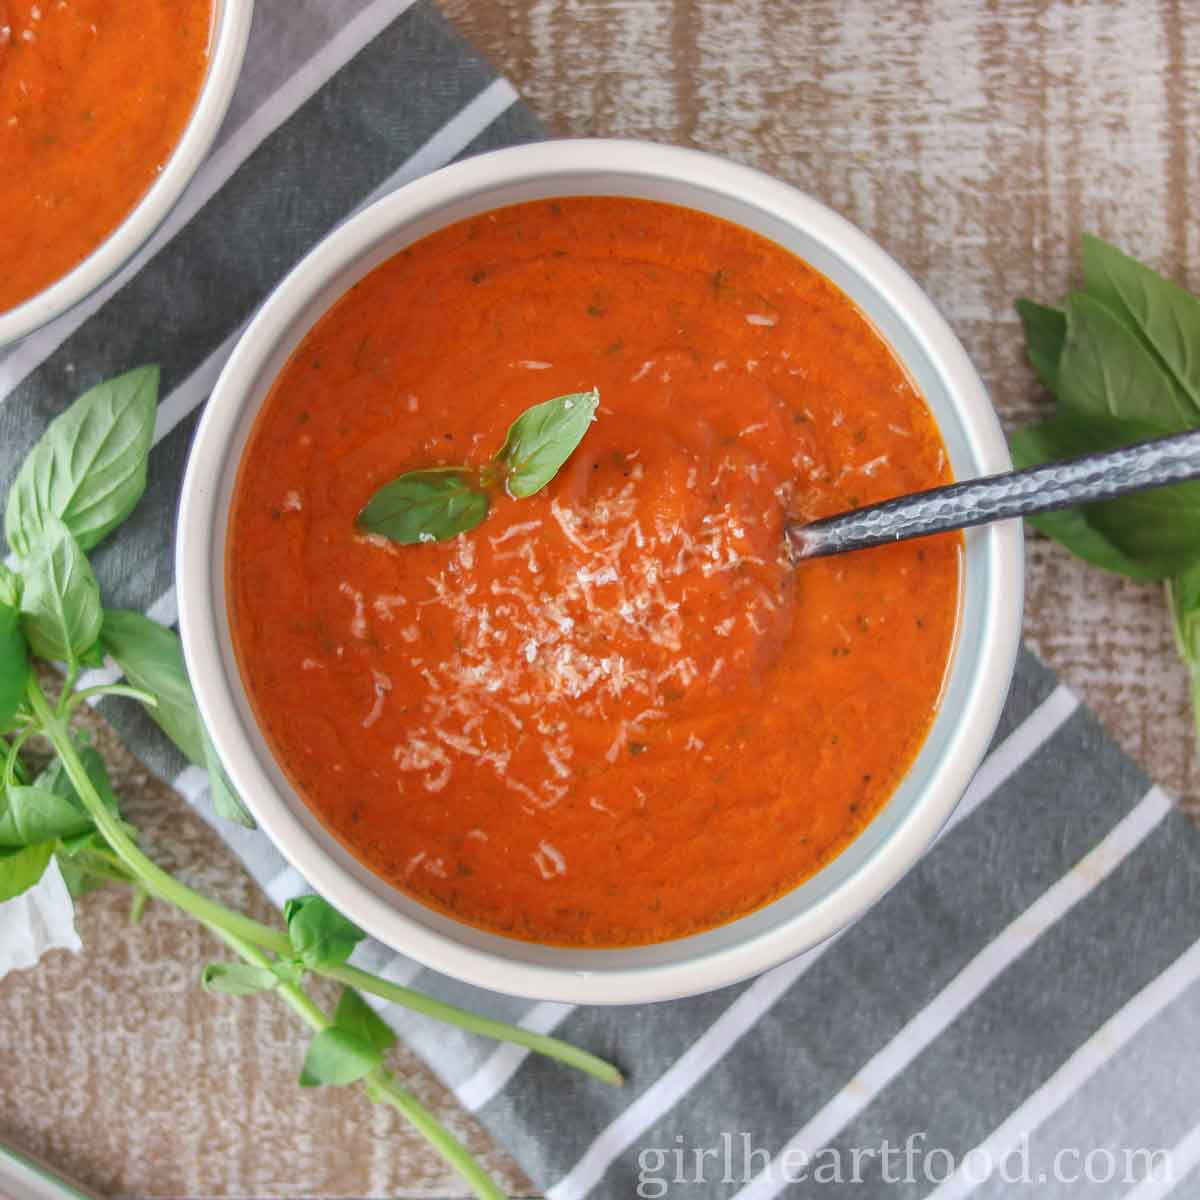 https://girlheartfood.com/wp-content/uploads/2020/06/Tomato-Soup-with-Fresh-Tomatoes-4.jpg